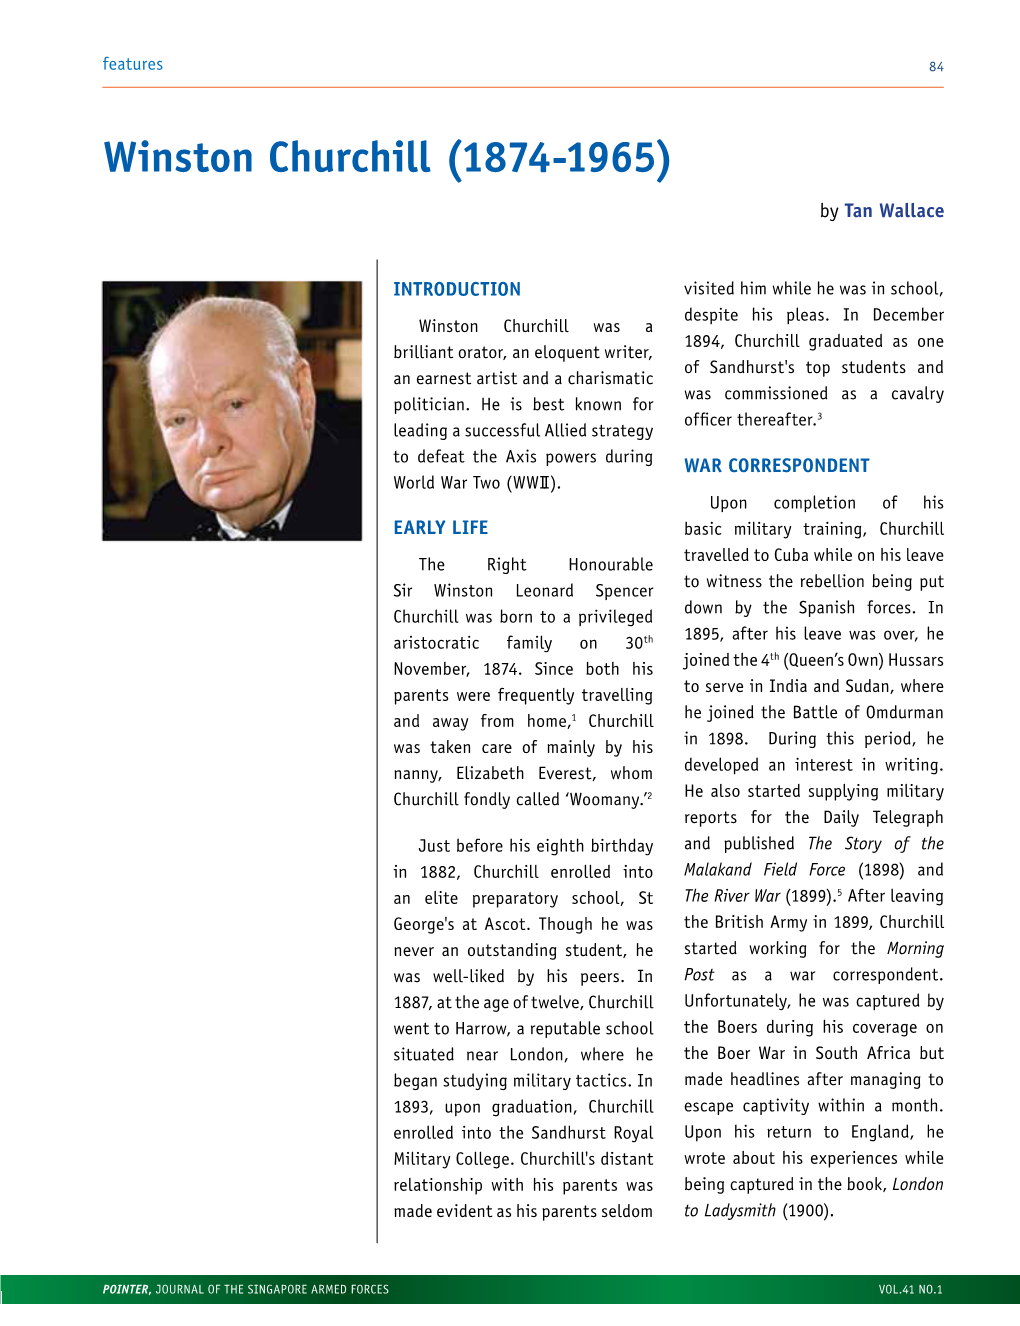 Winston Churchill (1874-1965) by Tan Wallace